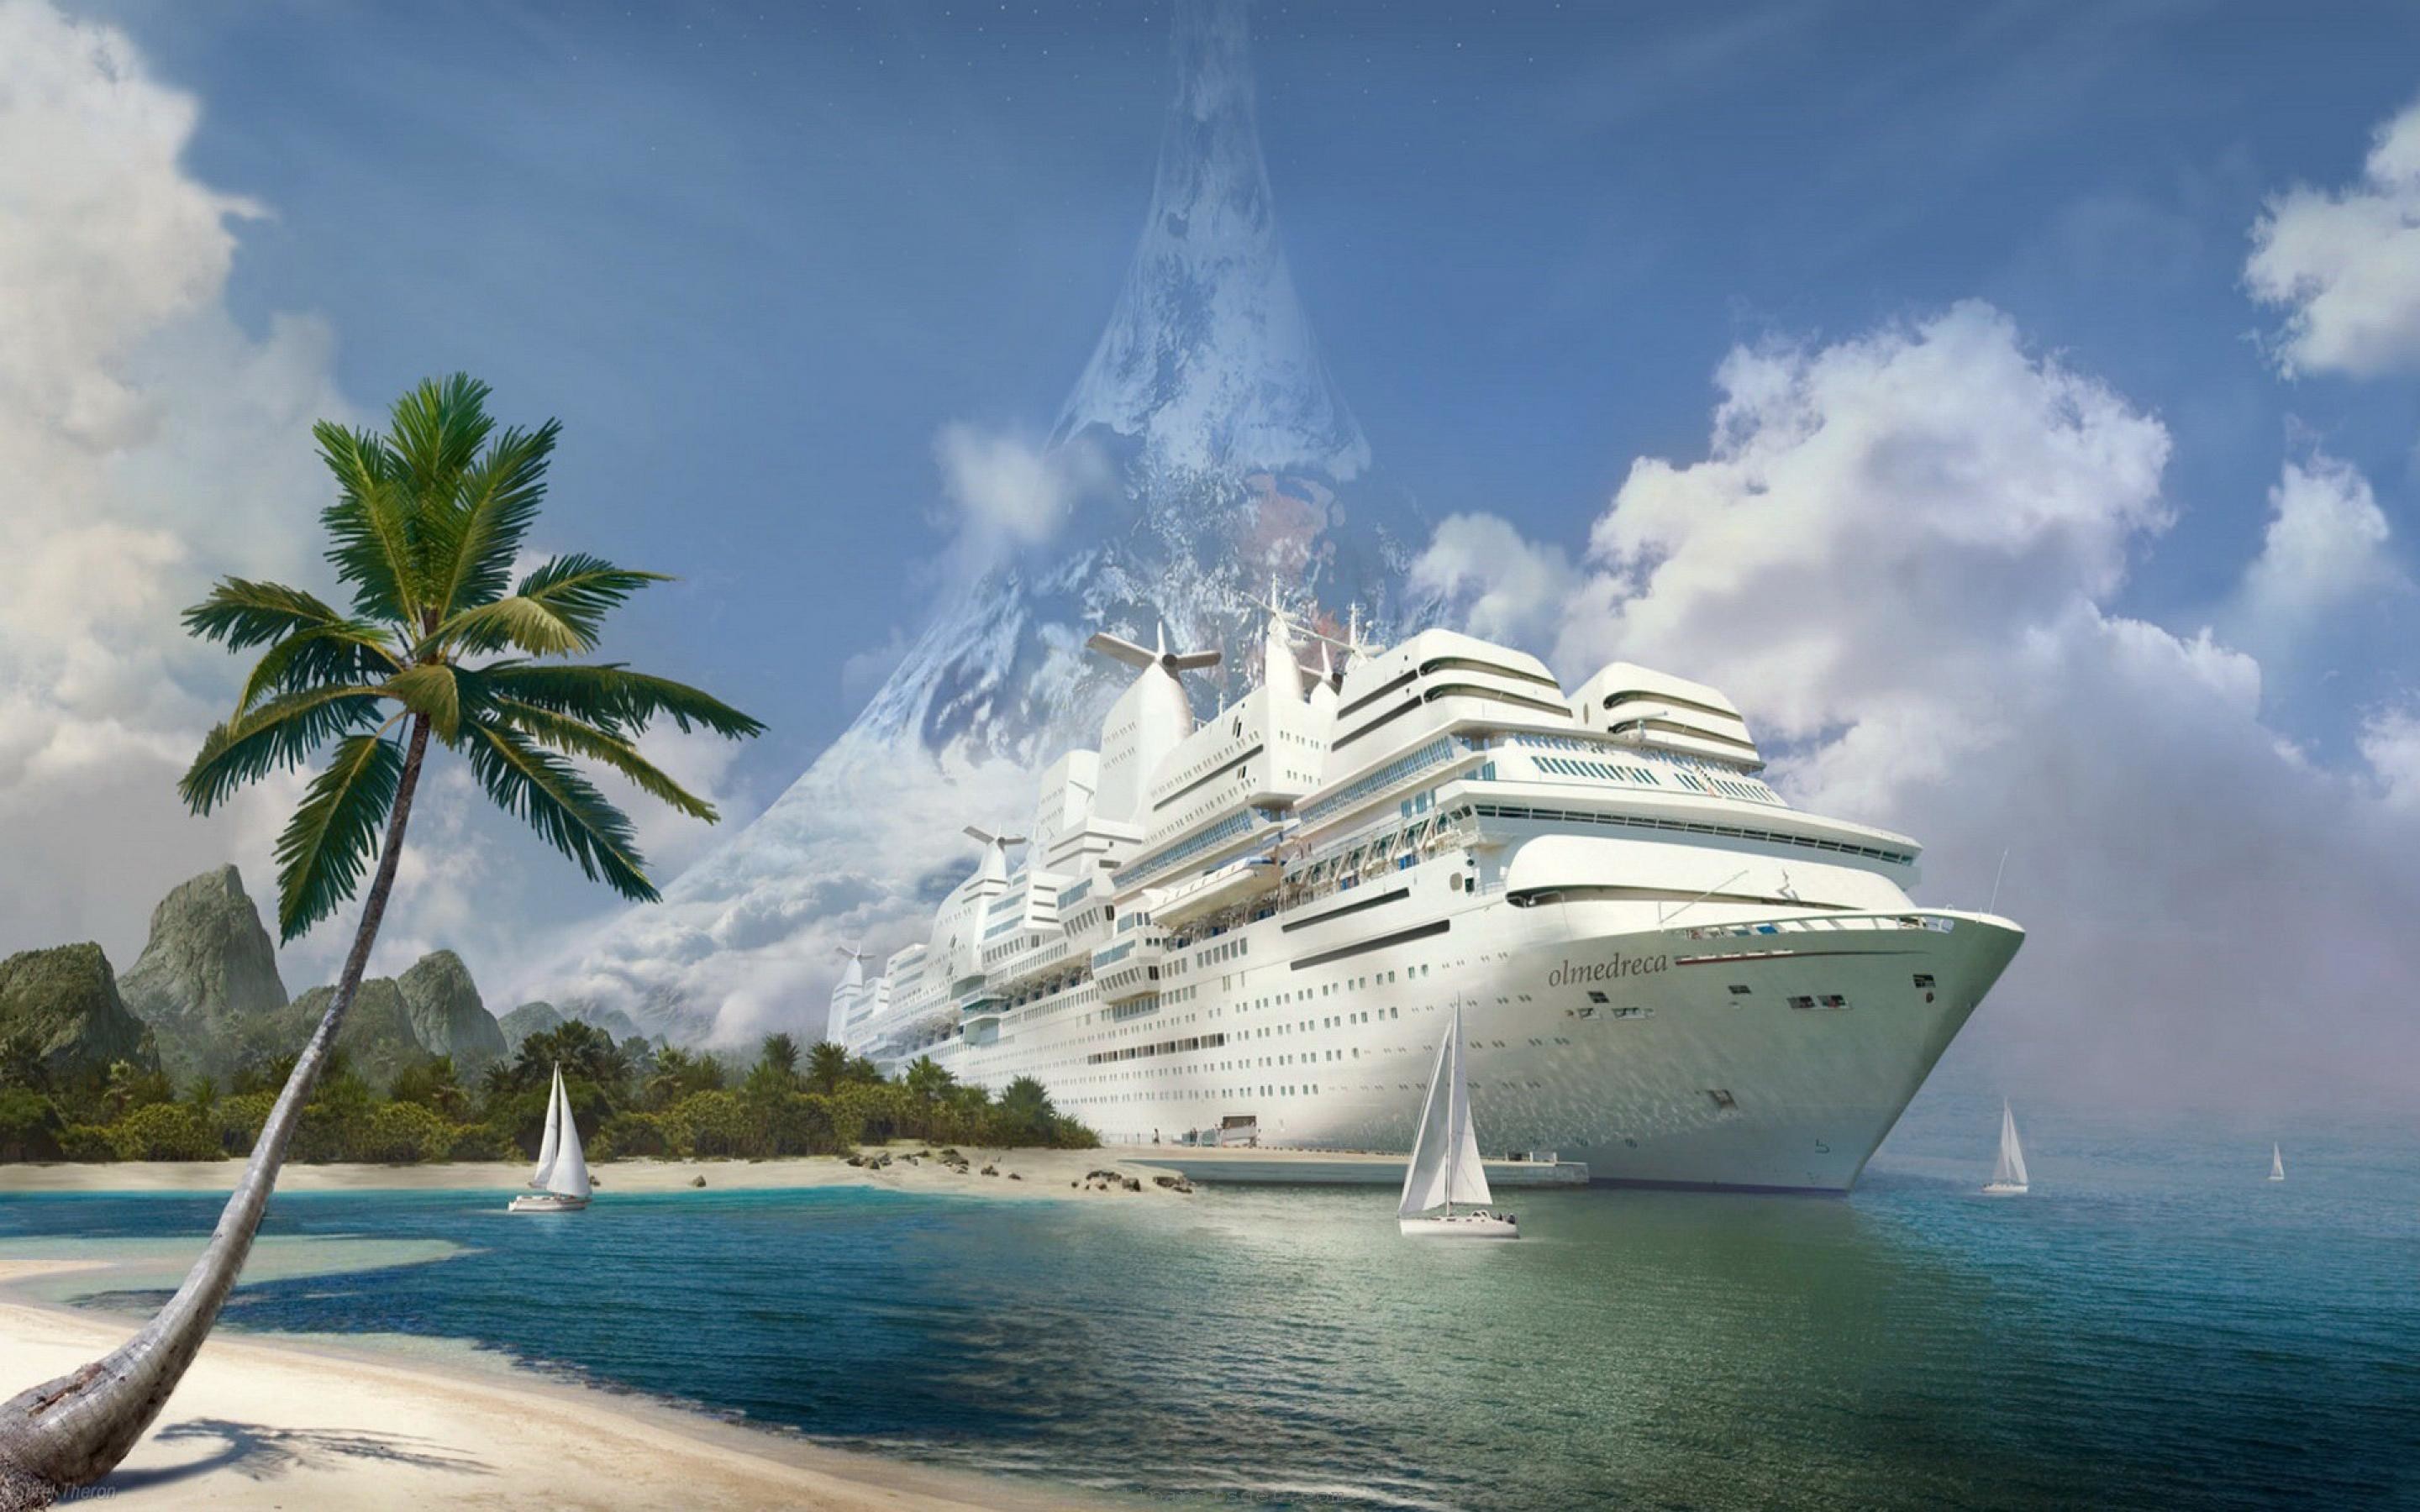 2880x1800 Carnival Cruise Ship Fantasy Wallpaper | ÐÐÐ Ð¡ÐÐÐ¯ Ð¢ÐÐÐÐ¢ÐÐÐ-1 | Pinterest | Carnival  cruise ships, Cruise ships and Cruises